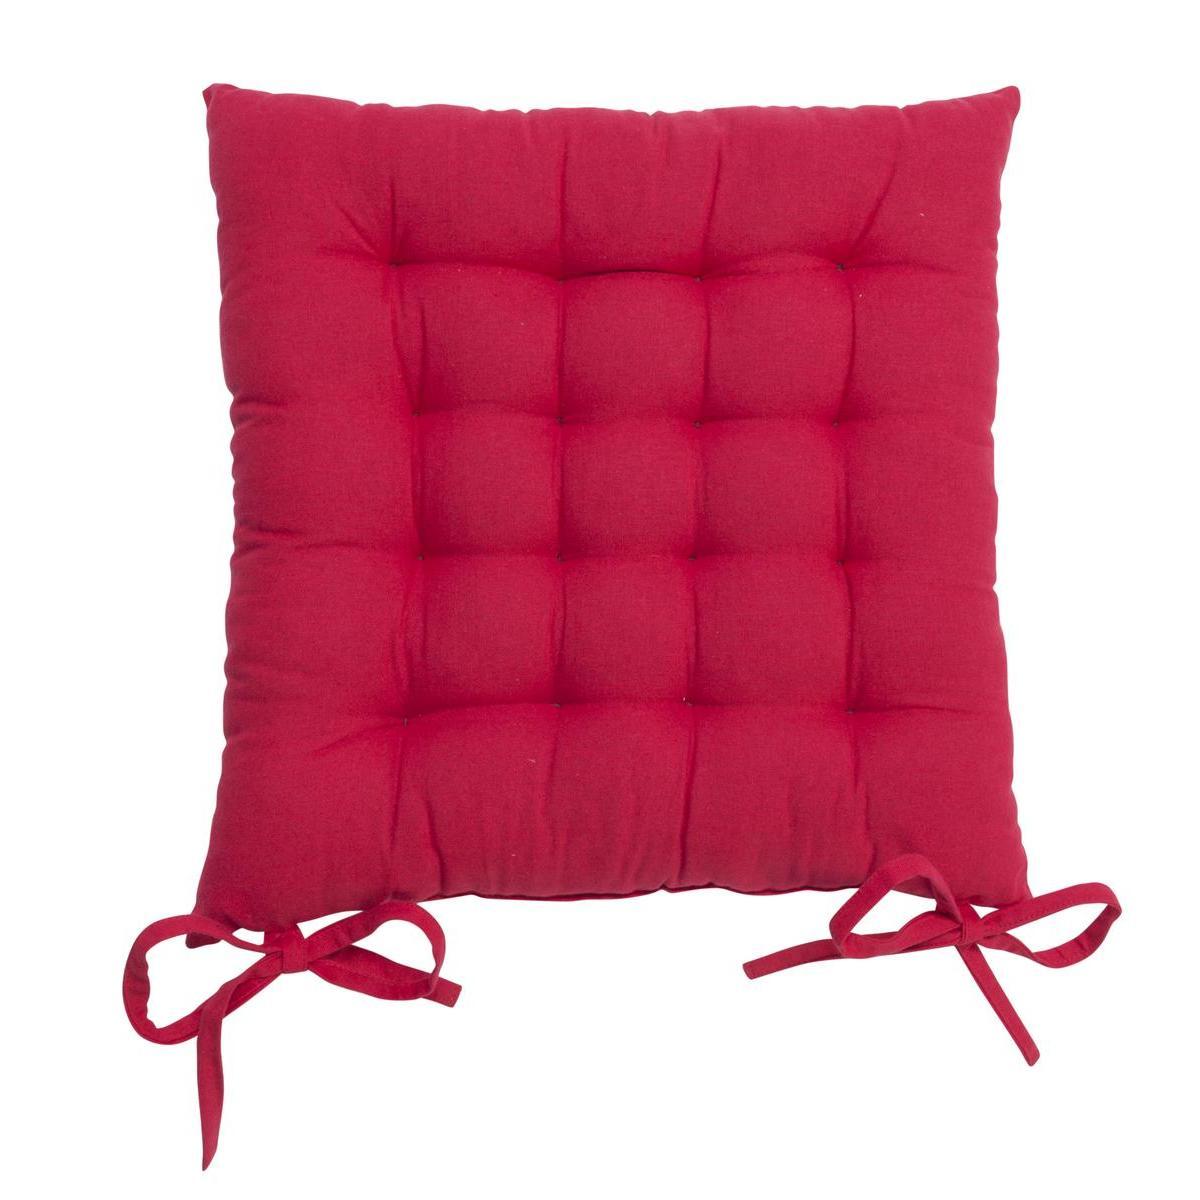 Galette de chaise - 40 x 40 cm - Rose framboise